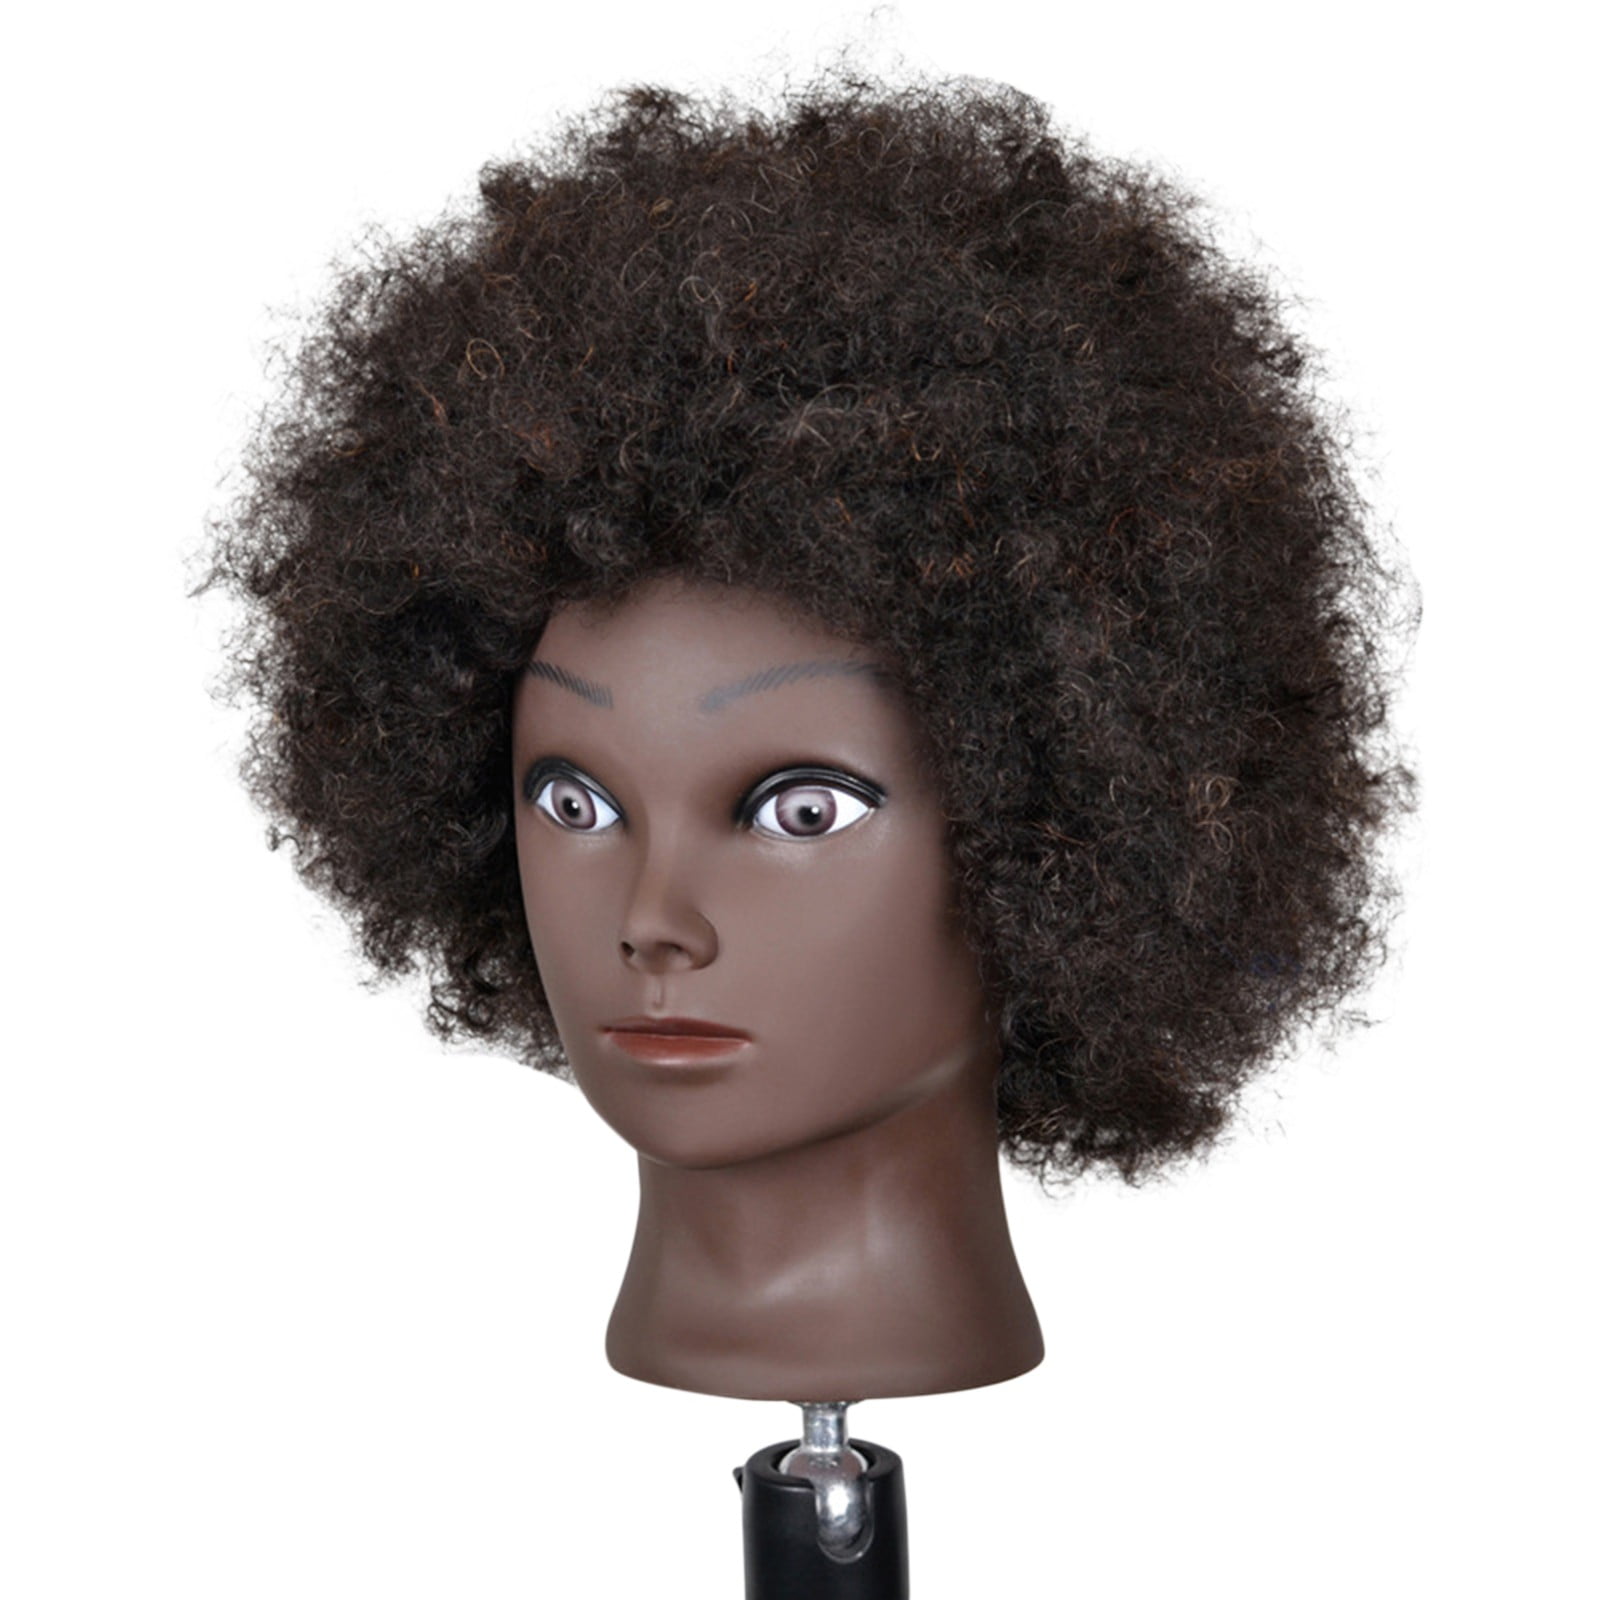 37 Wig Heads ideas  wigs, headed, mannequin heads